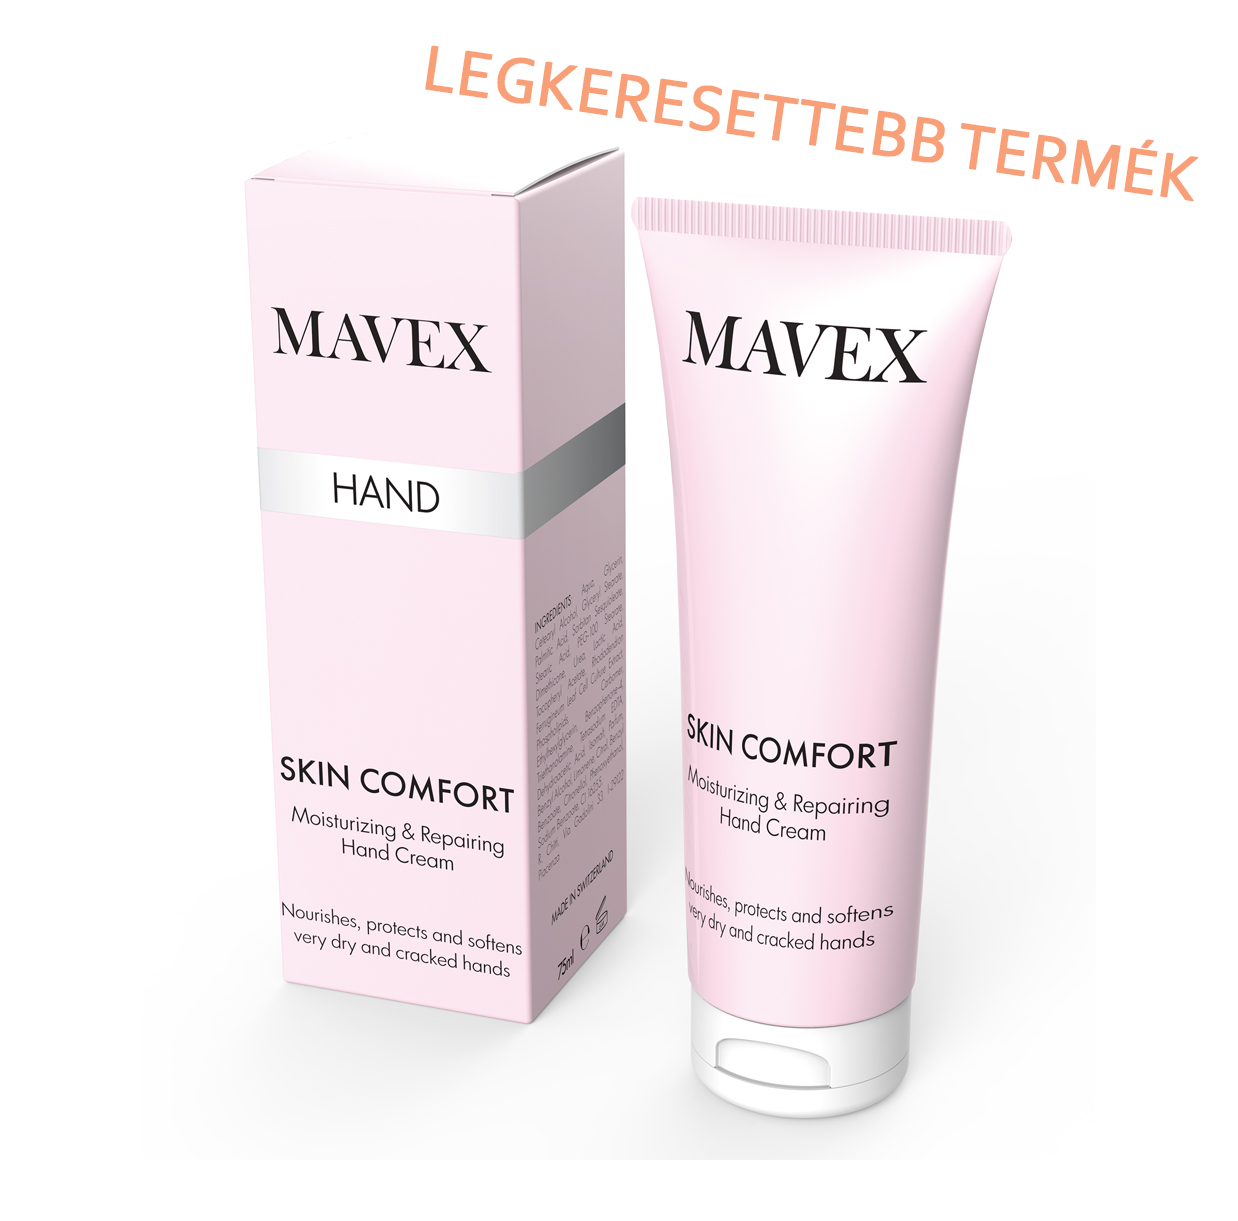 kozmetika_kecskemet_mavex_skin_hand_comfort_hidratalo_regeneralo_kezkrem